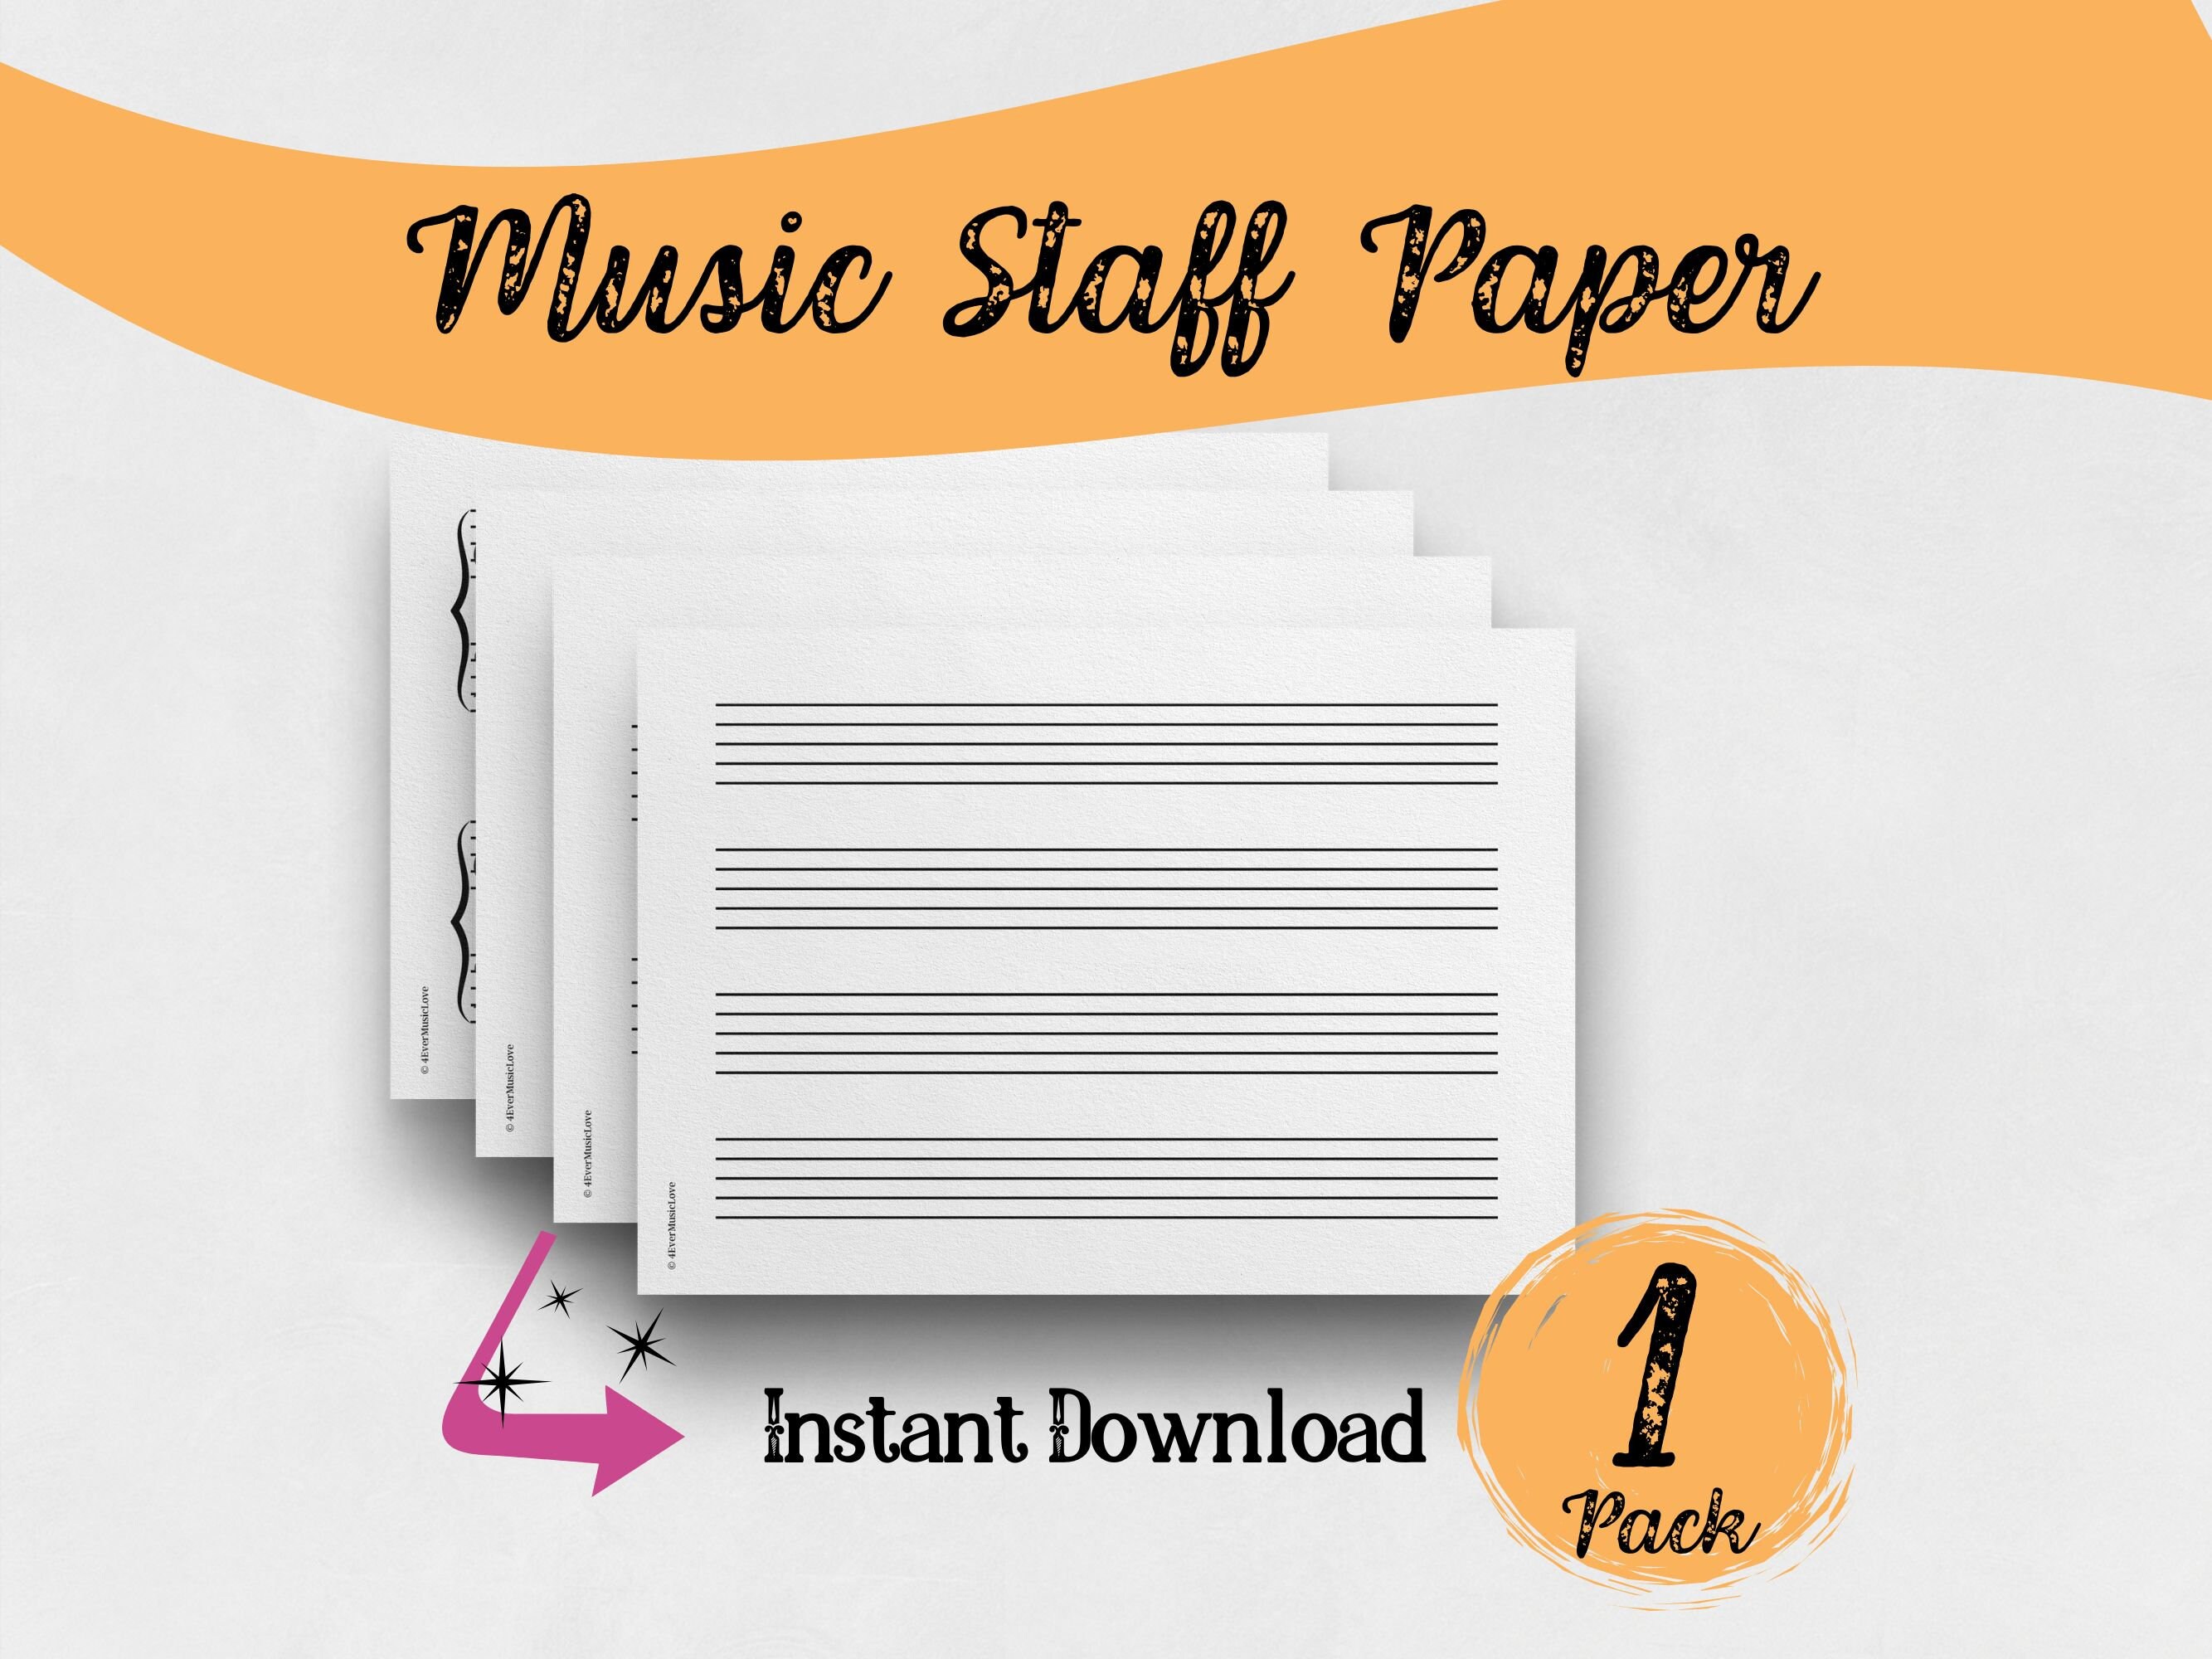 A4 Blank Sheet Music US Letter Printable Sheet Music Manuscript